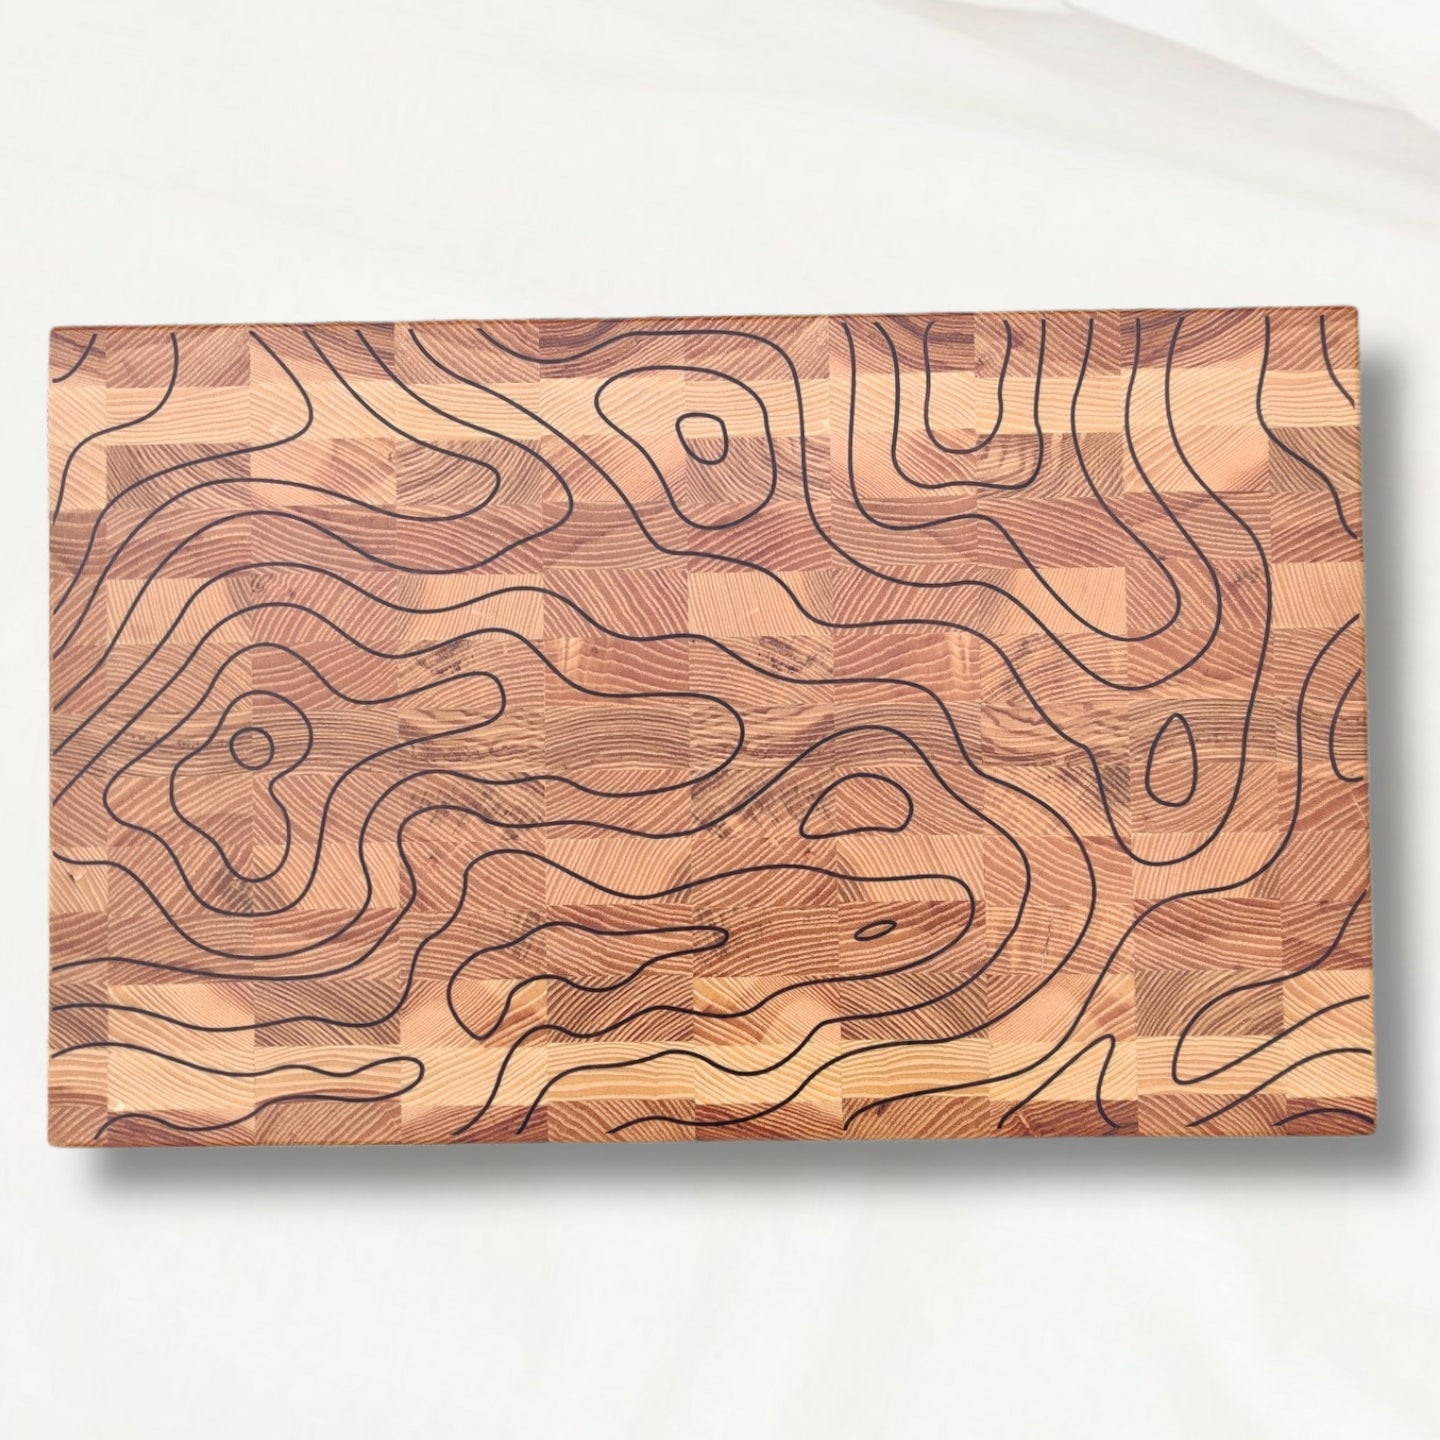 Topographic cutting board